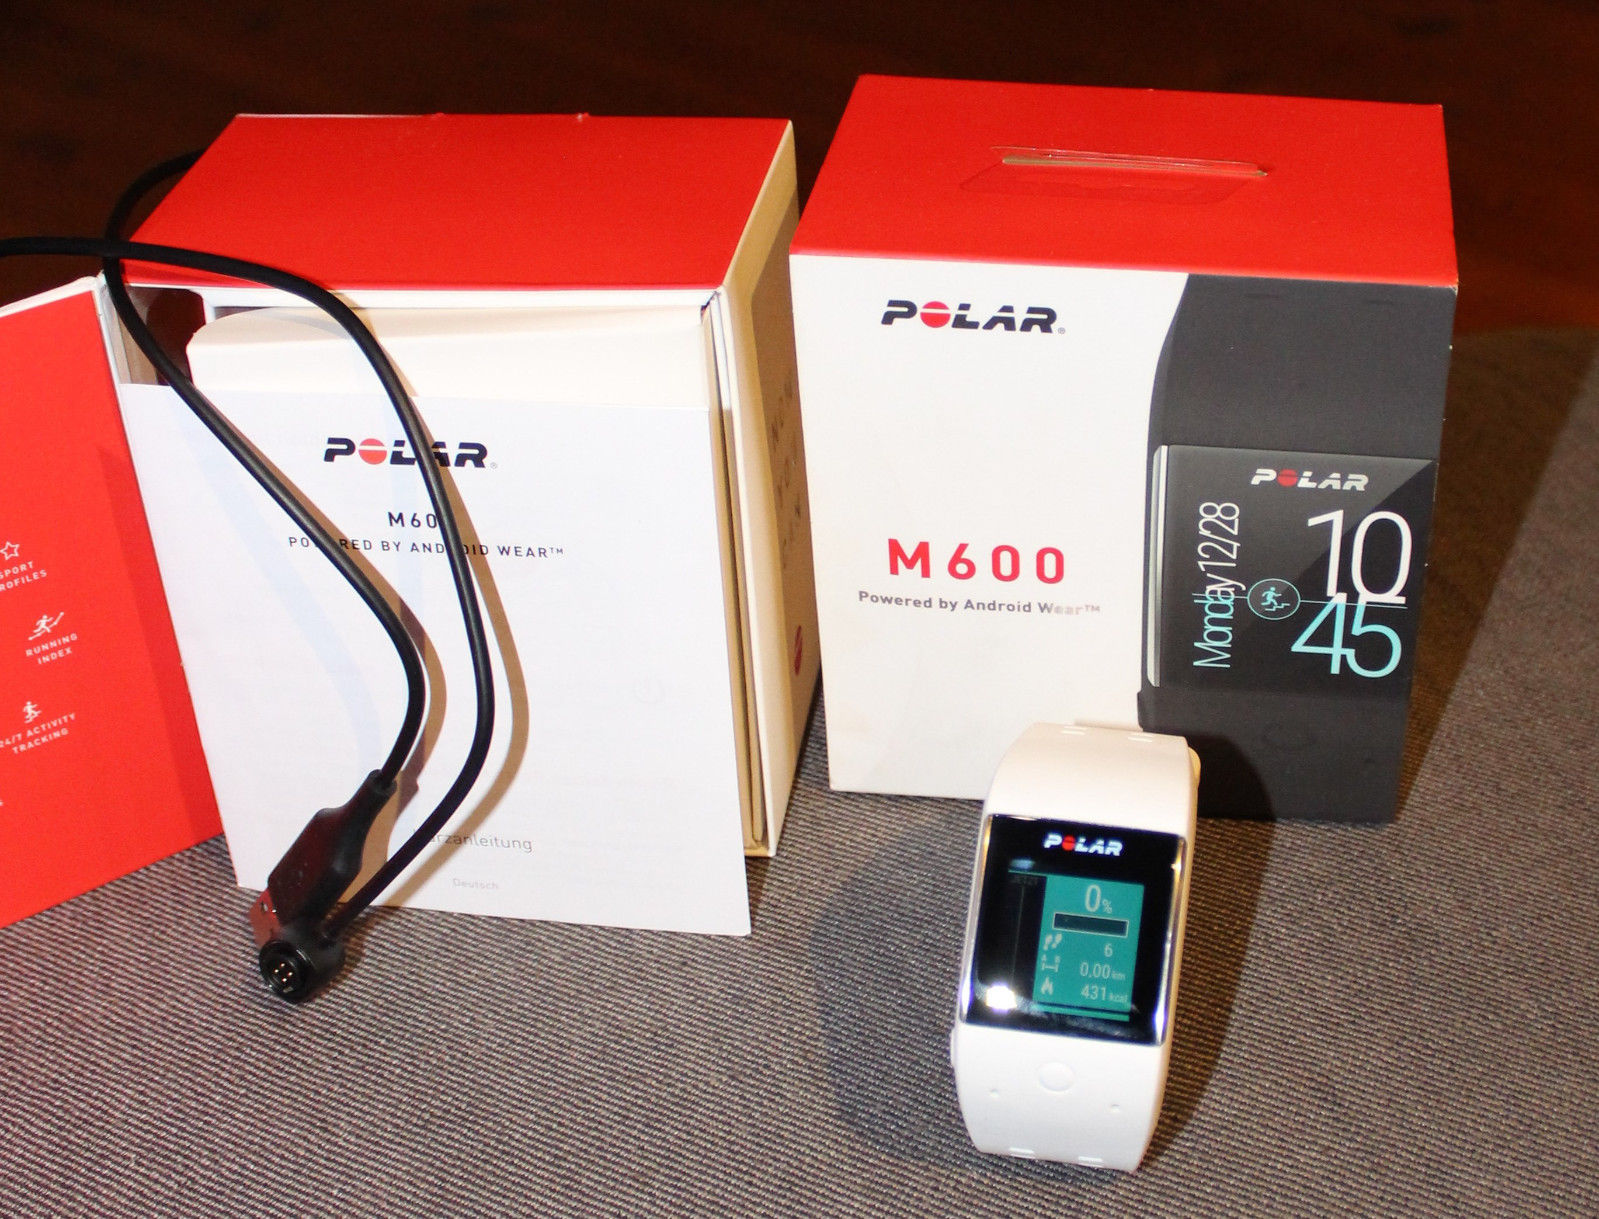 Polar M600 Weiß Smartwatch Android Wear Fitness GPS Pulsuhr Sportuhr M/L NEU